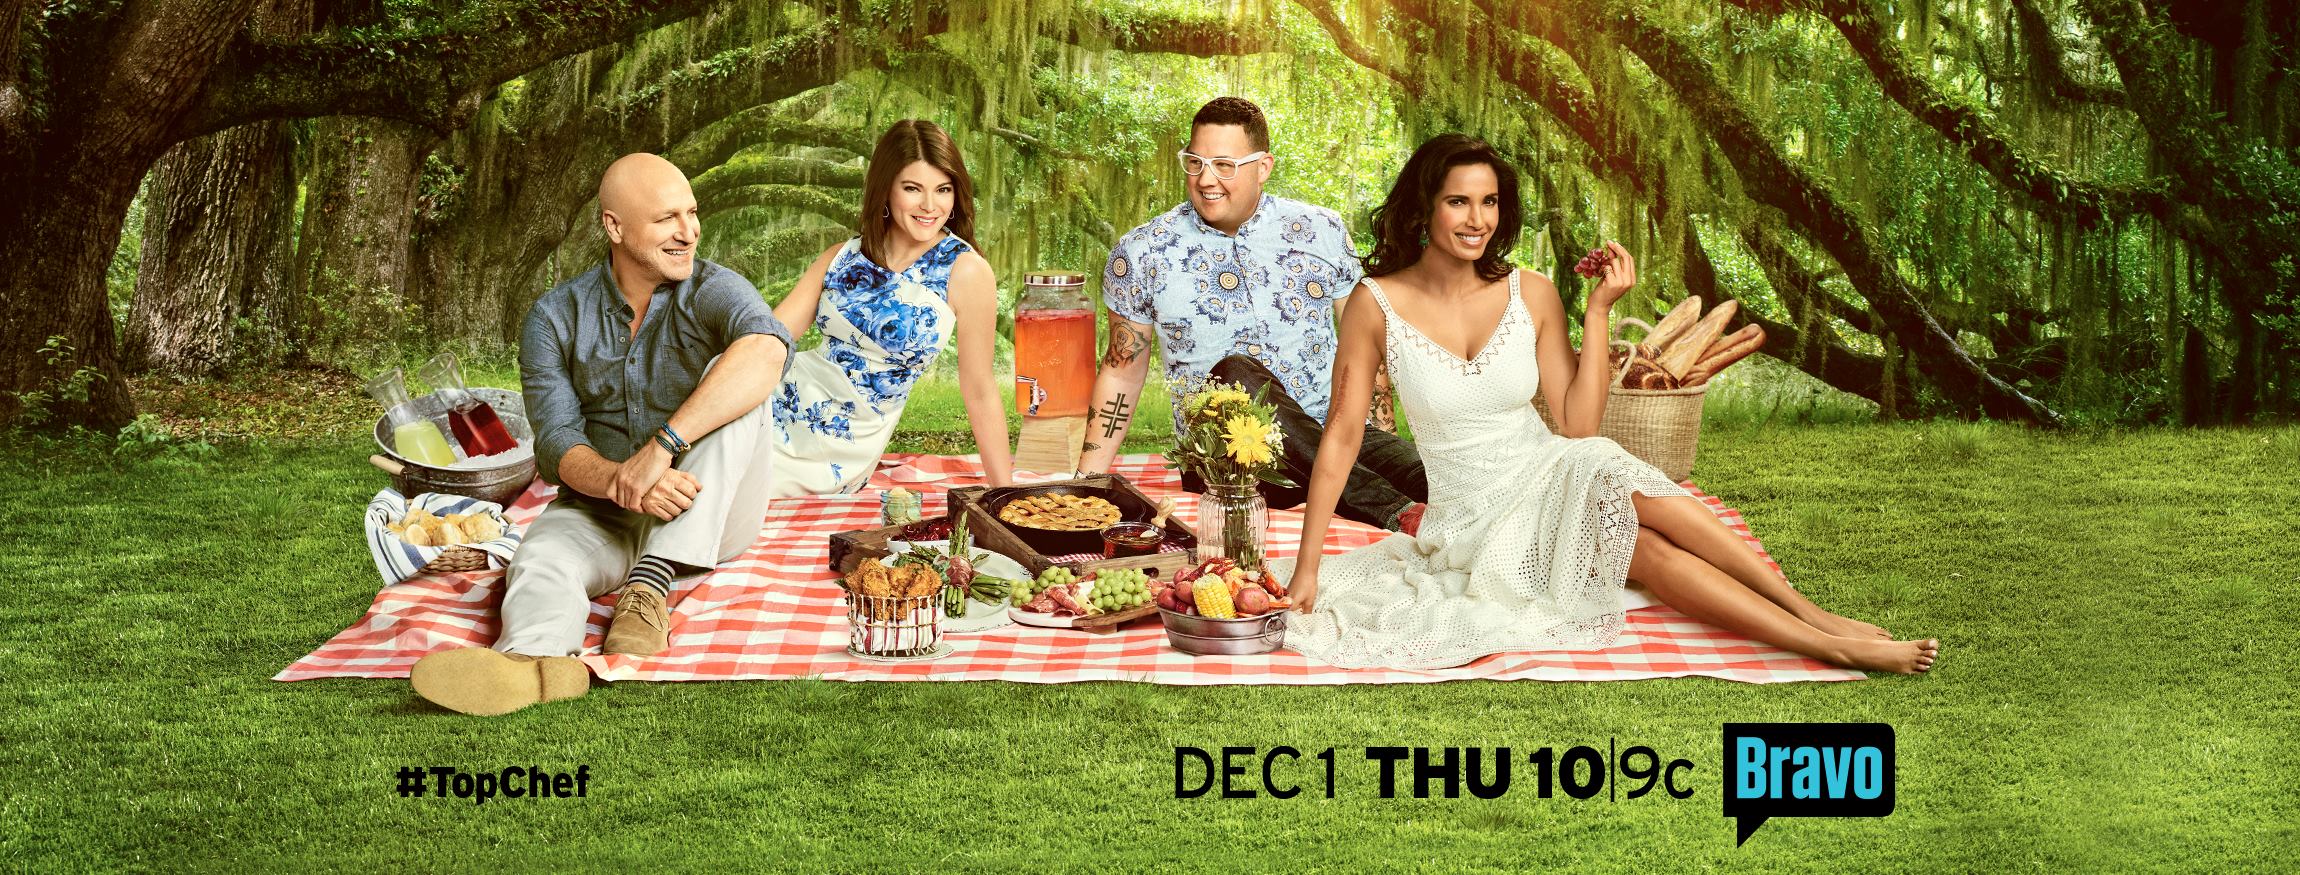 Bravo’s ‘Top Chef’ Season 14 Premieres Tonight!